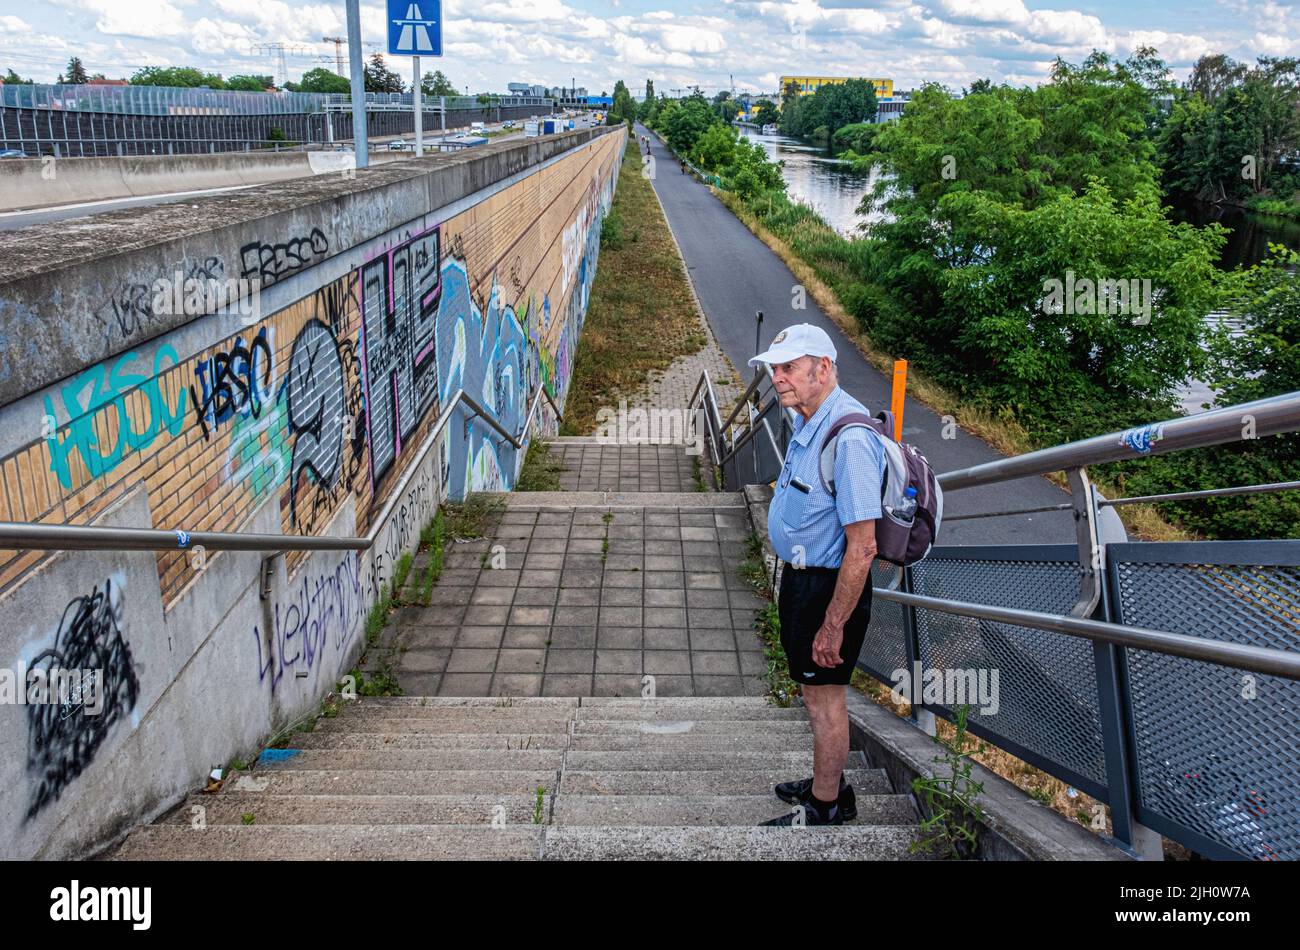 Senior elderly man on steps from Massantebrücke  Bridge to cycle path along Teltow canal - Johannisthal, Berlin, Germany. Stock Photo